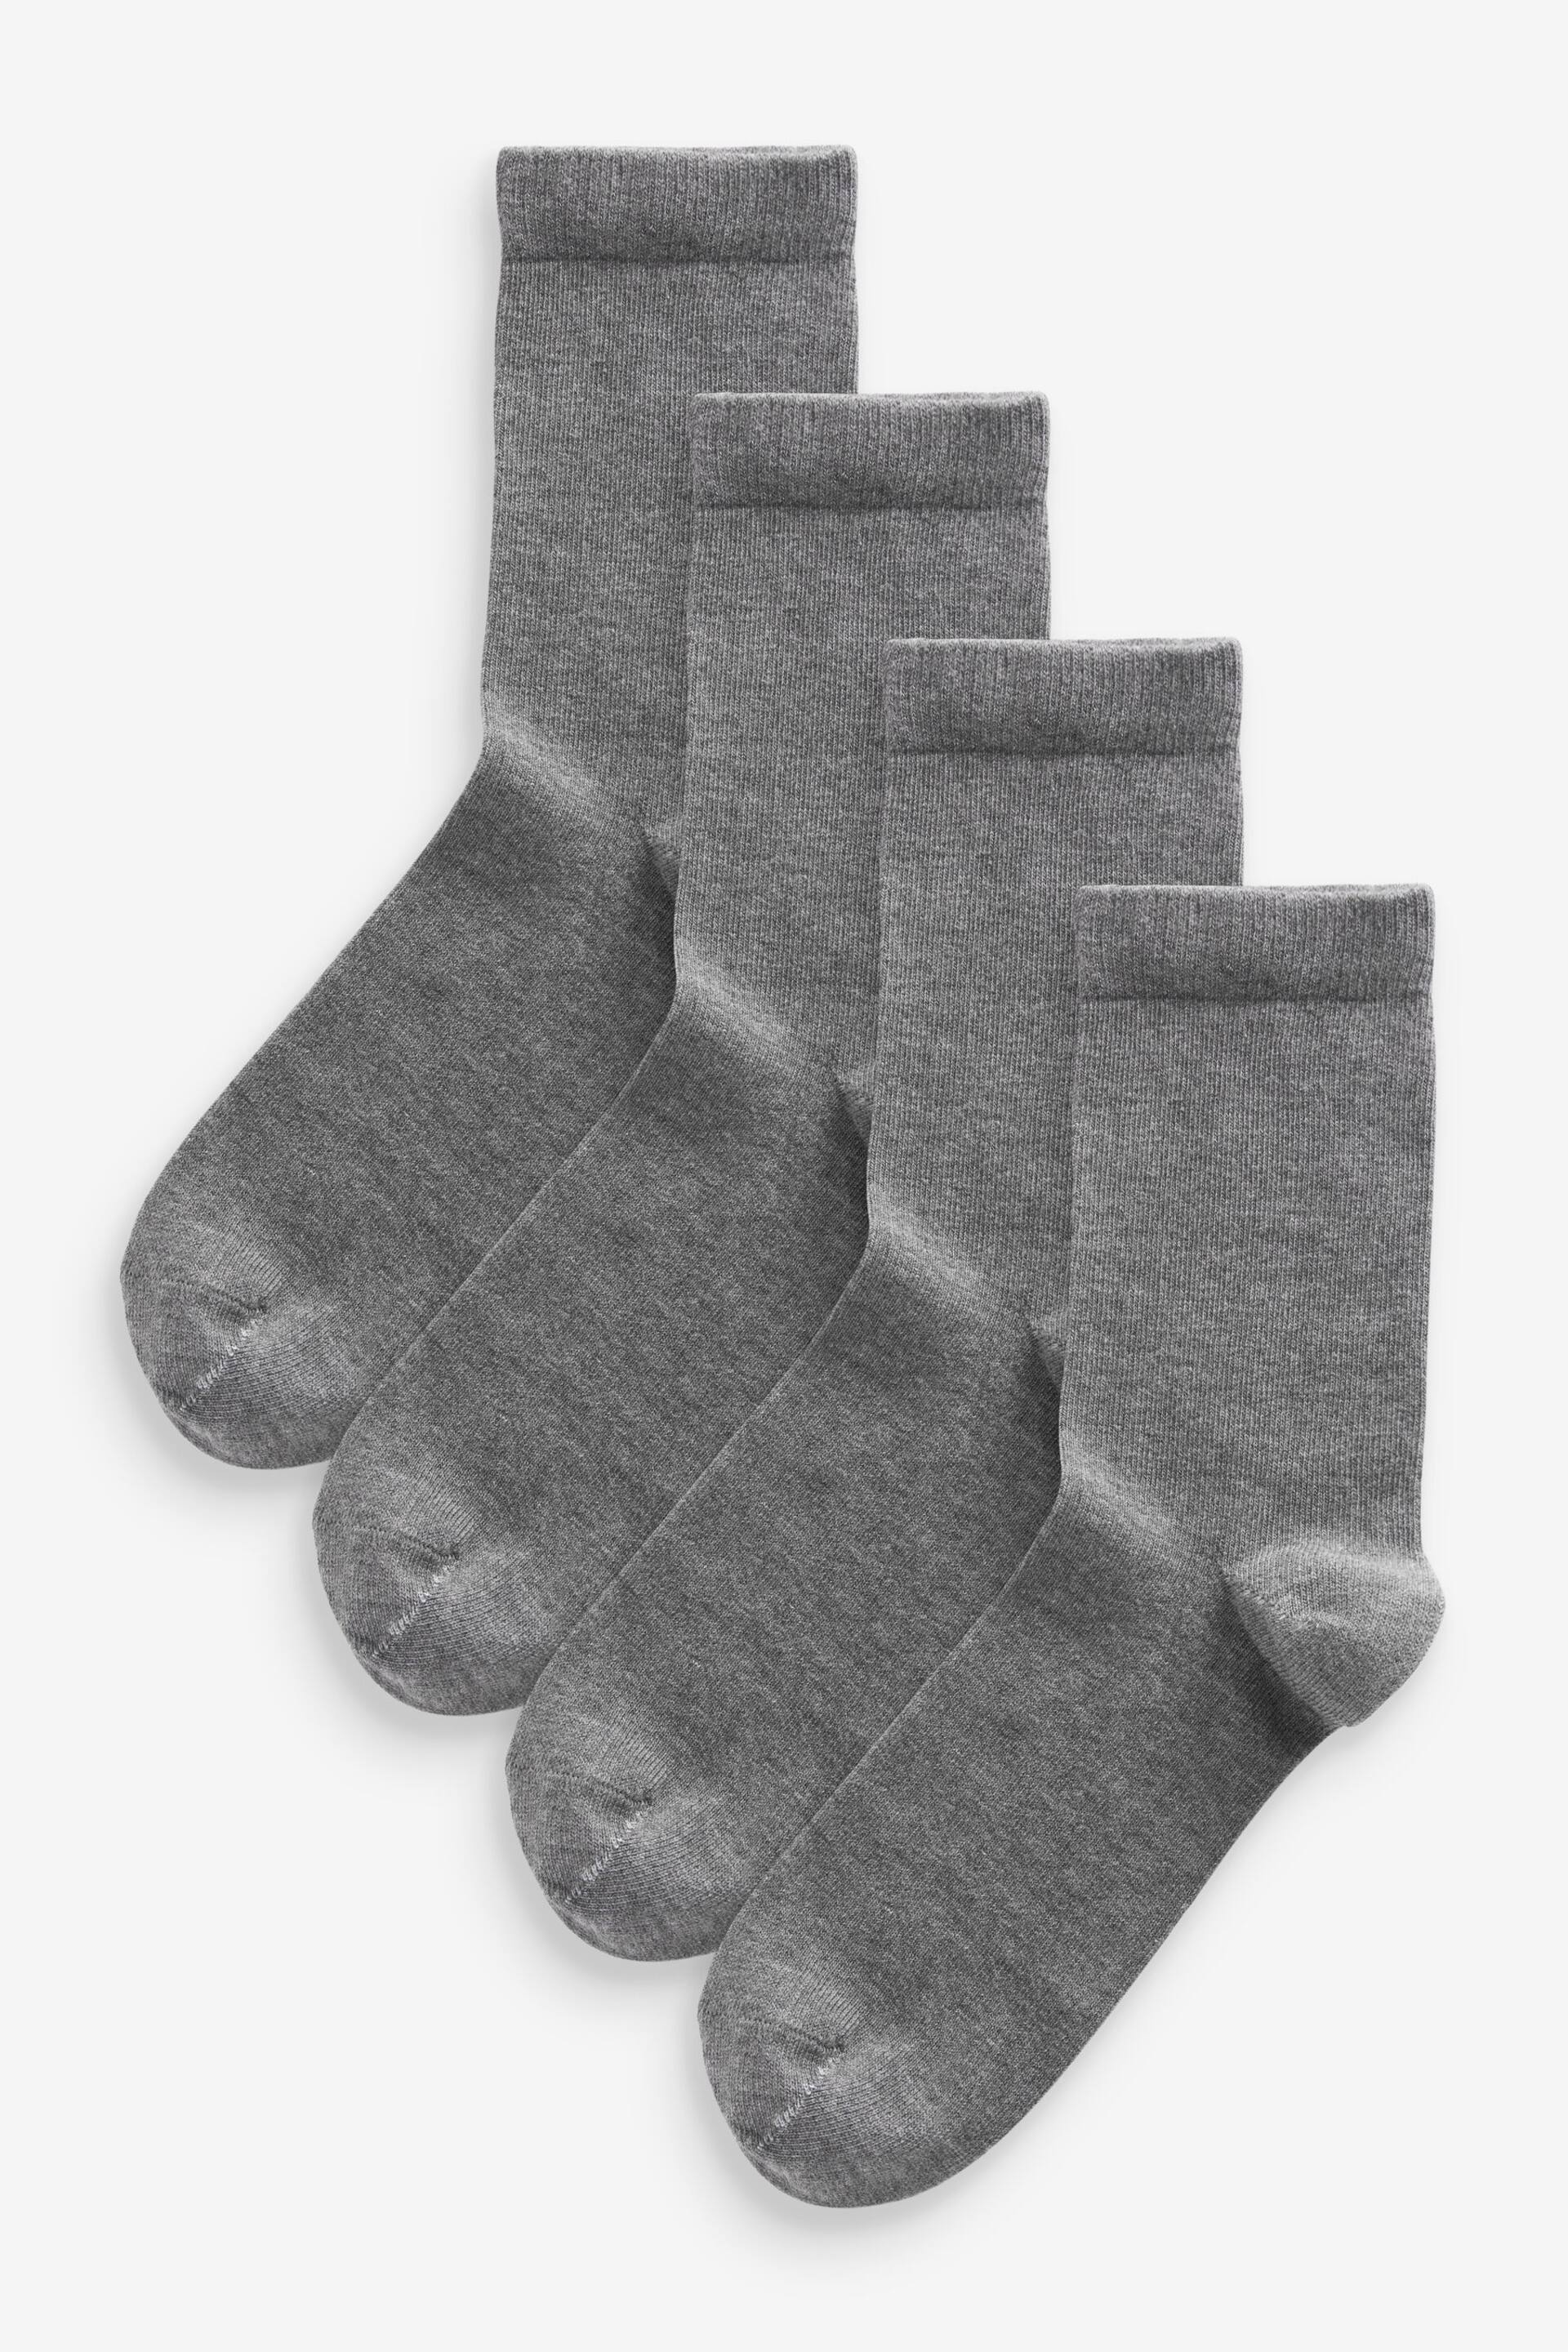 Dark Grey Modal Ankle Socks 4 Pack - Image 1 of 2